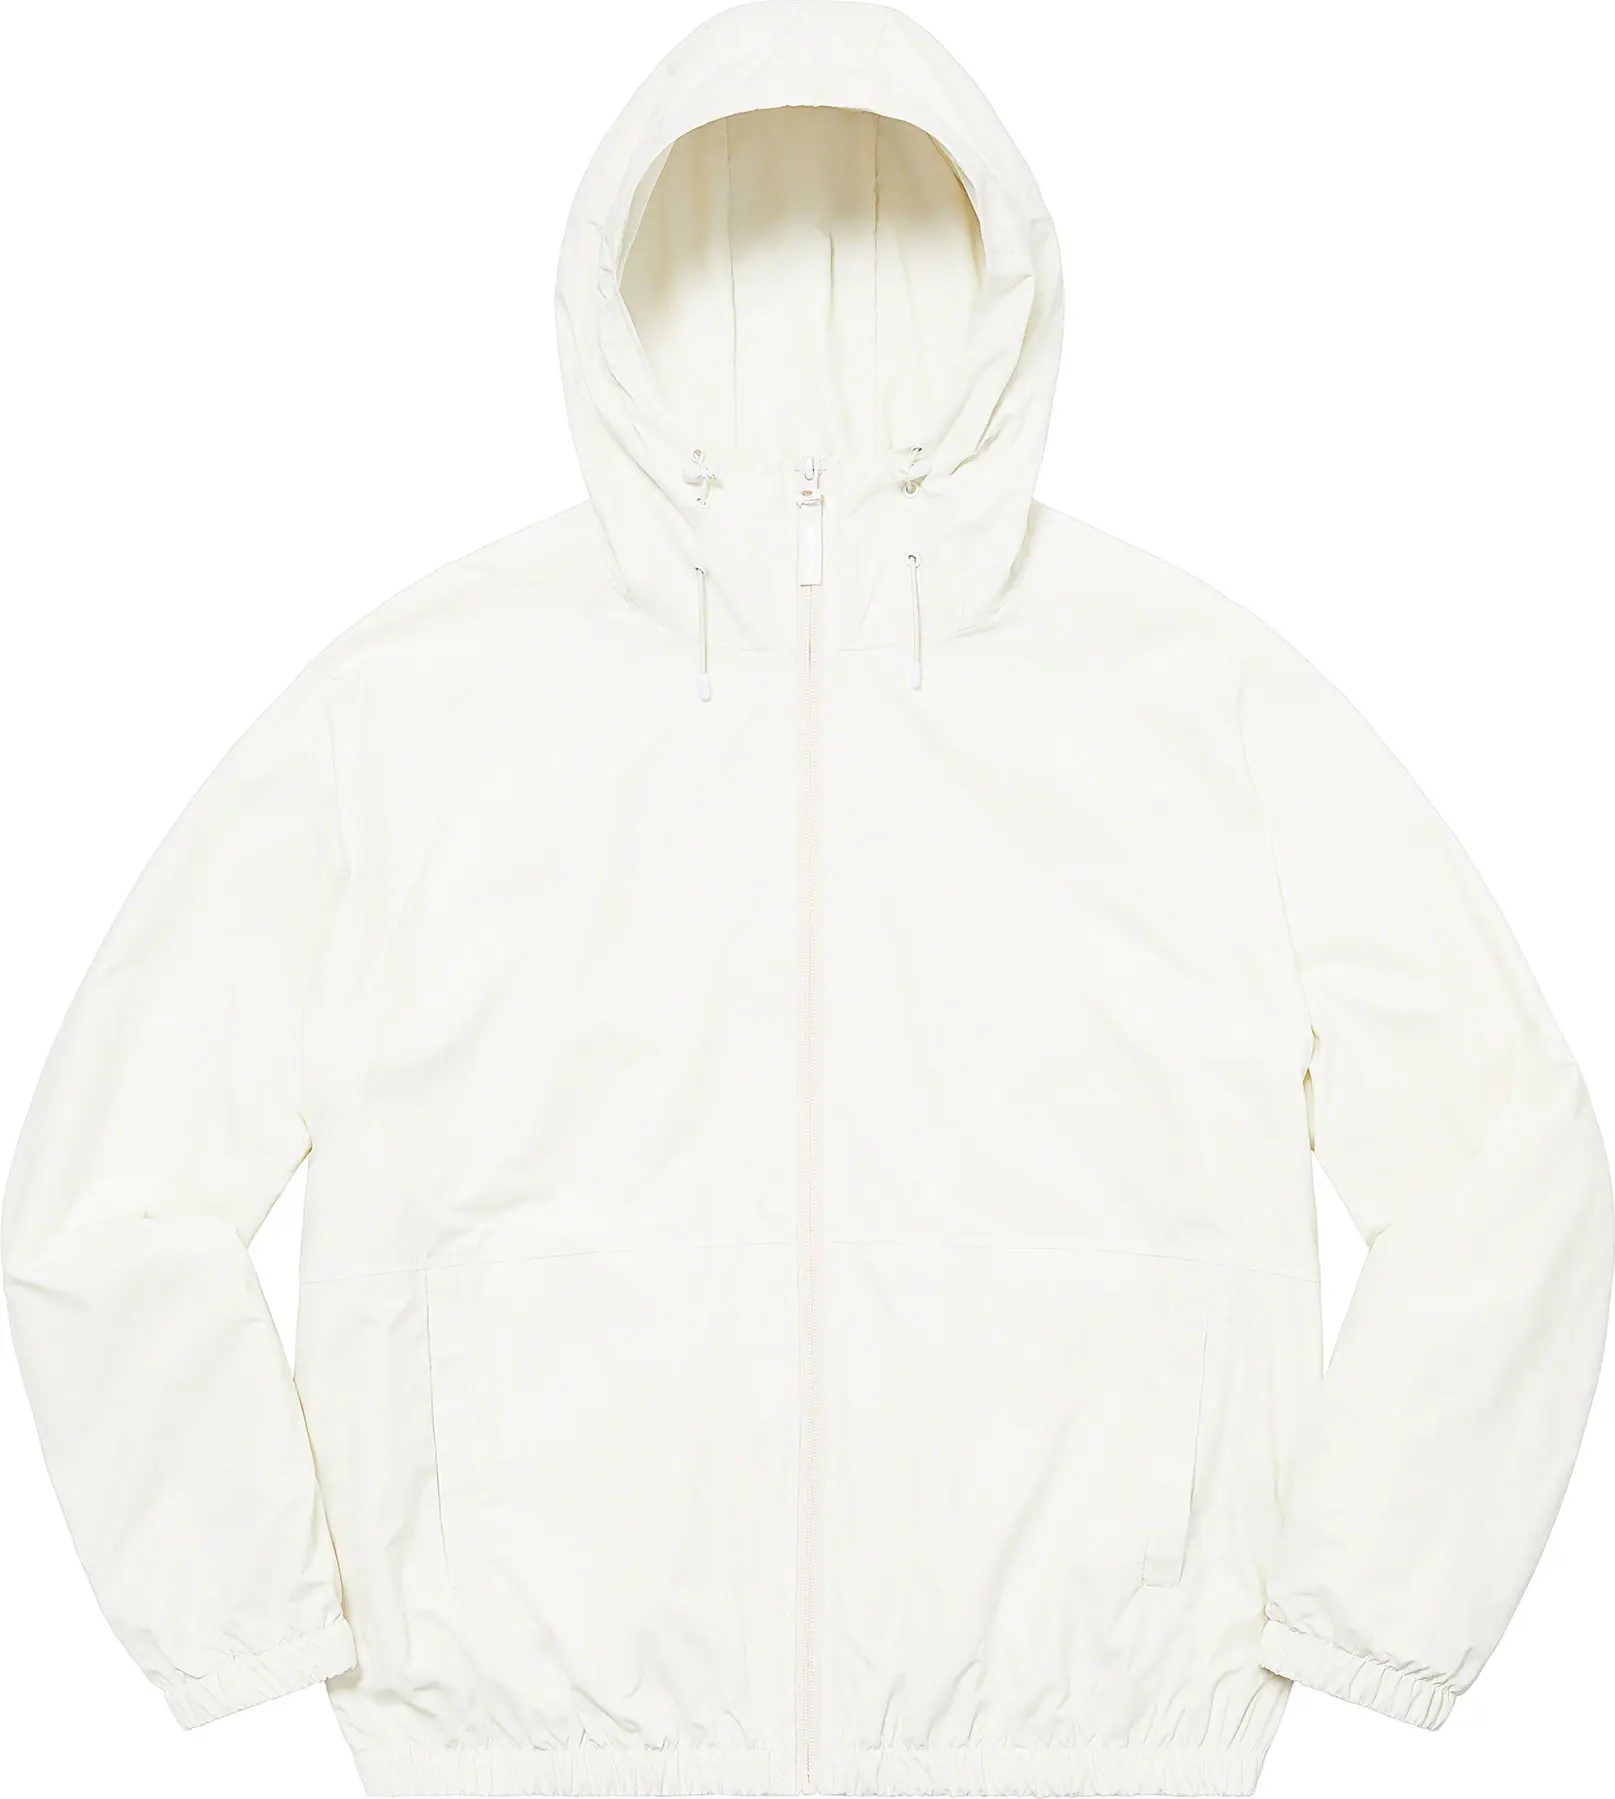 Supreme Lightweight Nylon Hooded Jacket